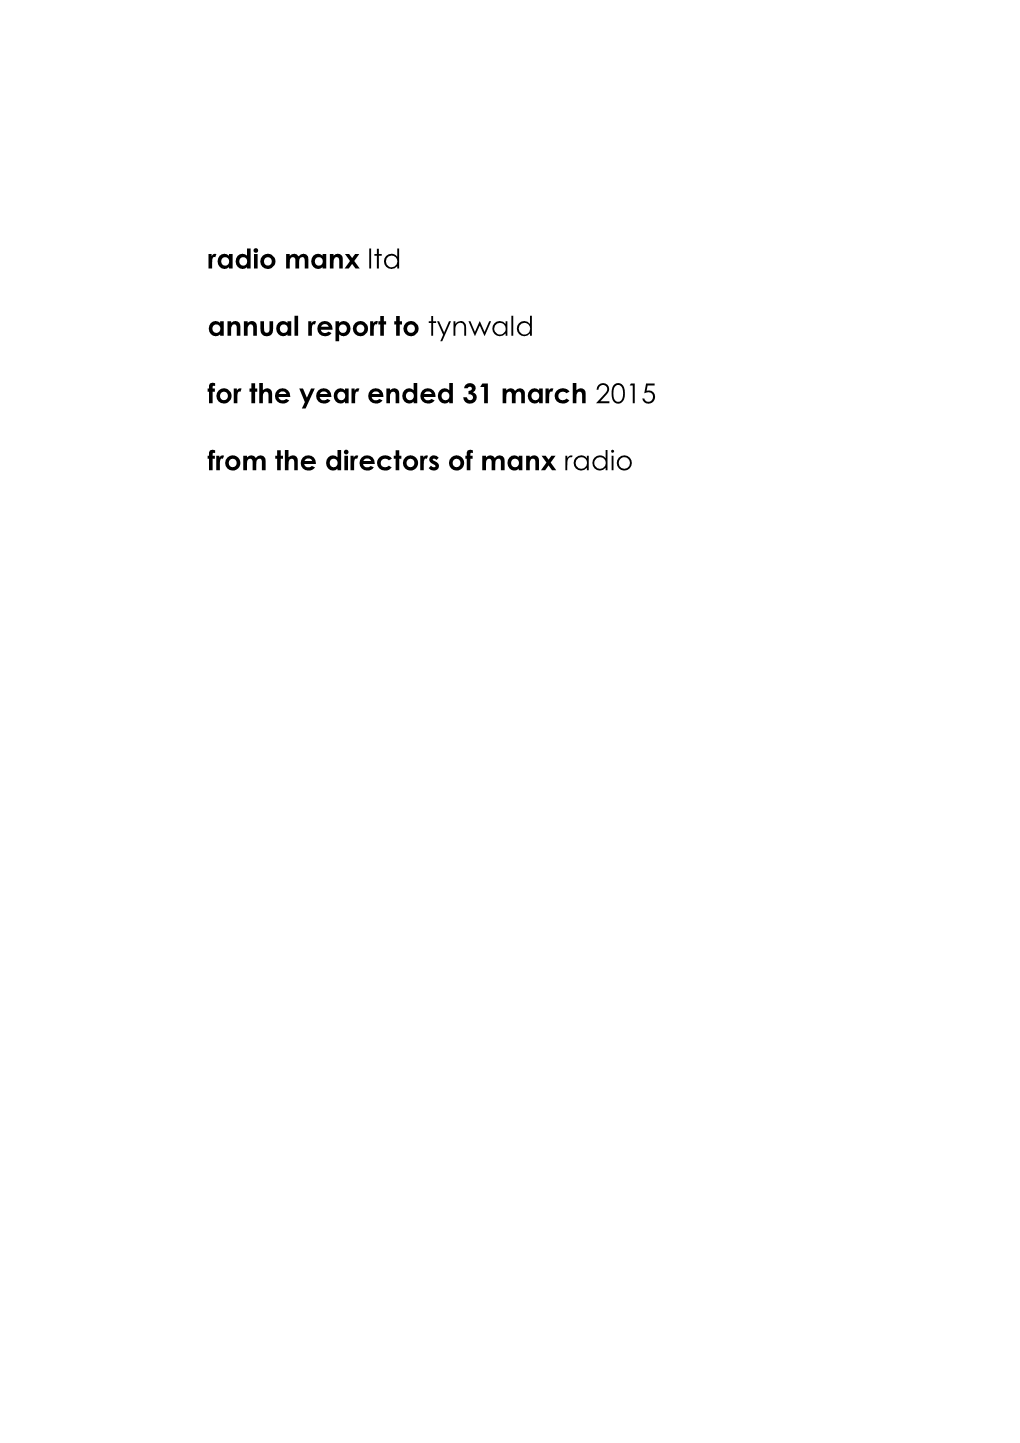 Radio Manx Ltd Annual Report to Tynwald